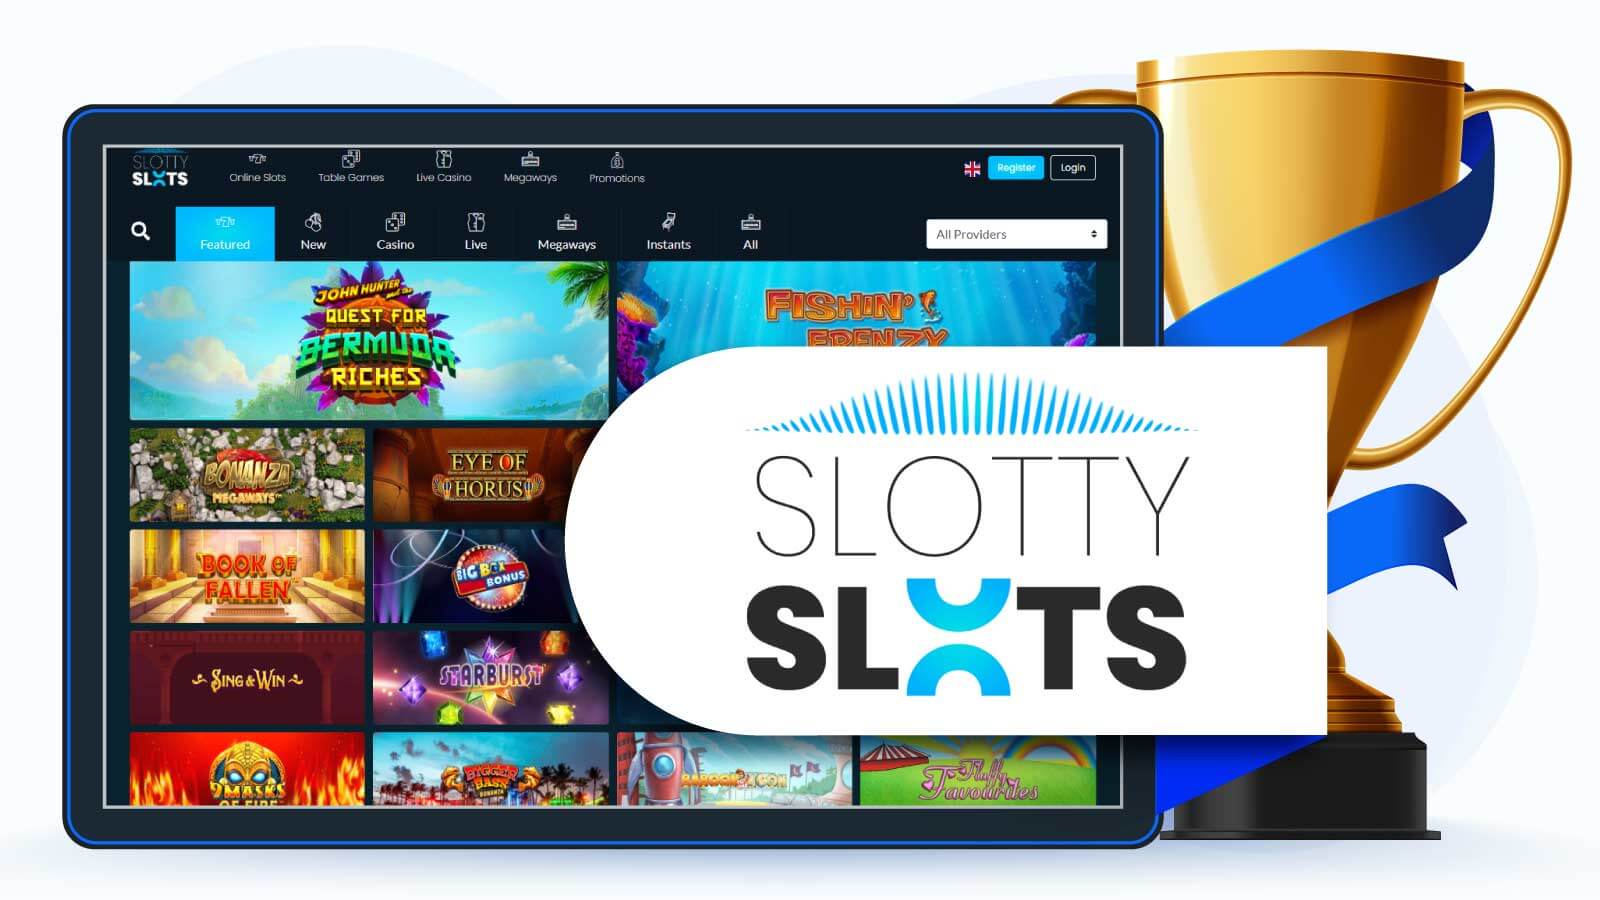 Slotty Slots Casino – Best Grace Media Limited Casino Overall